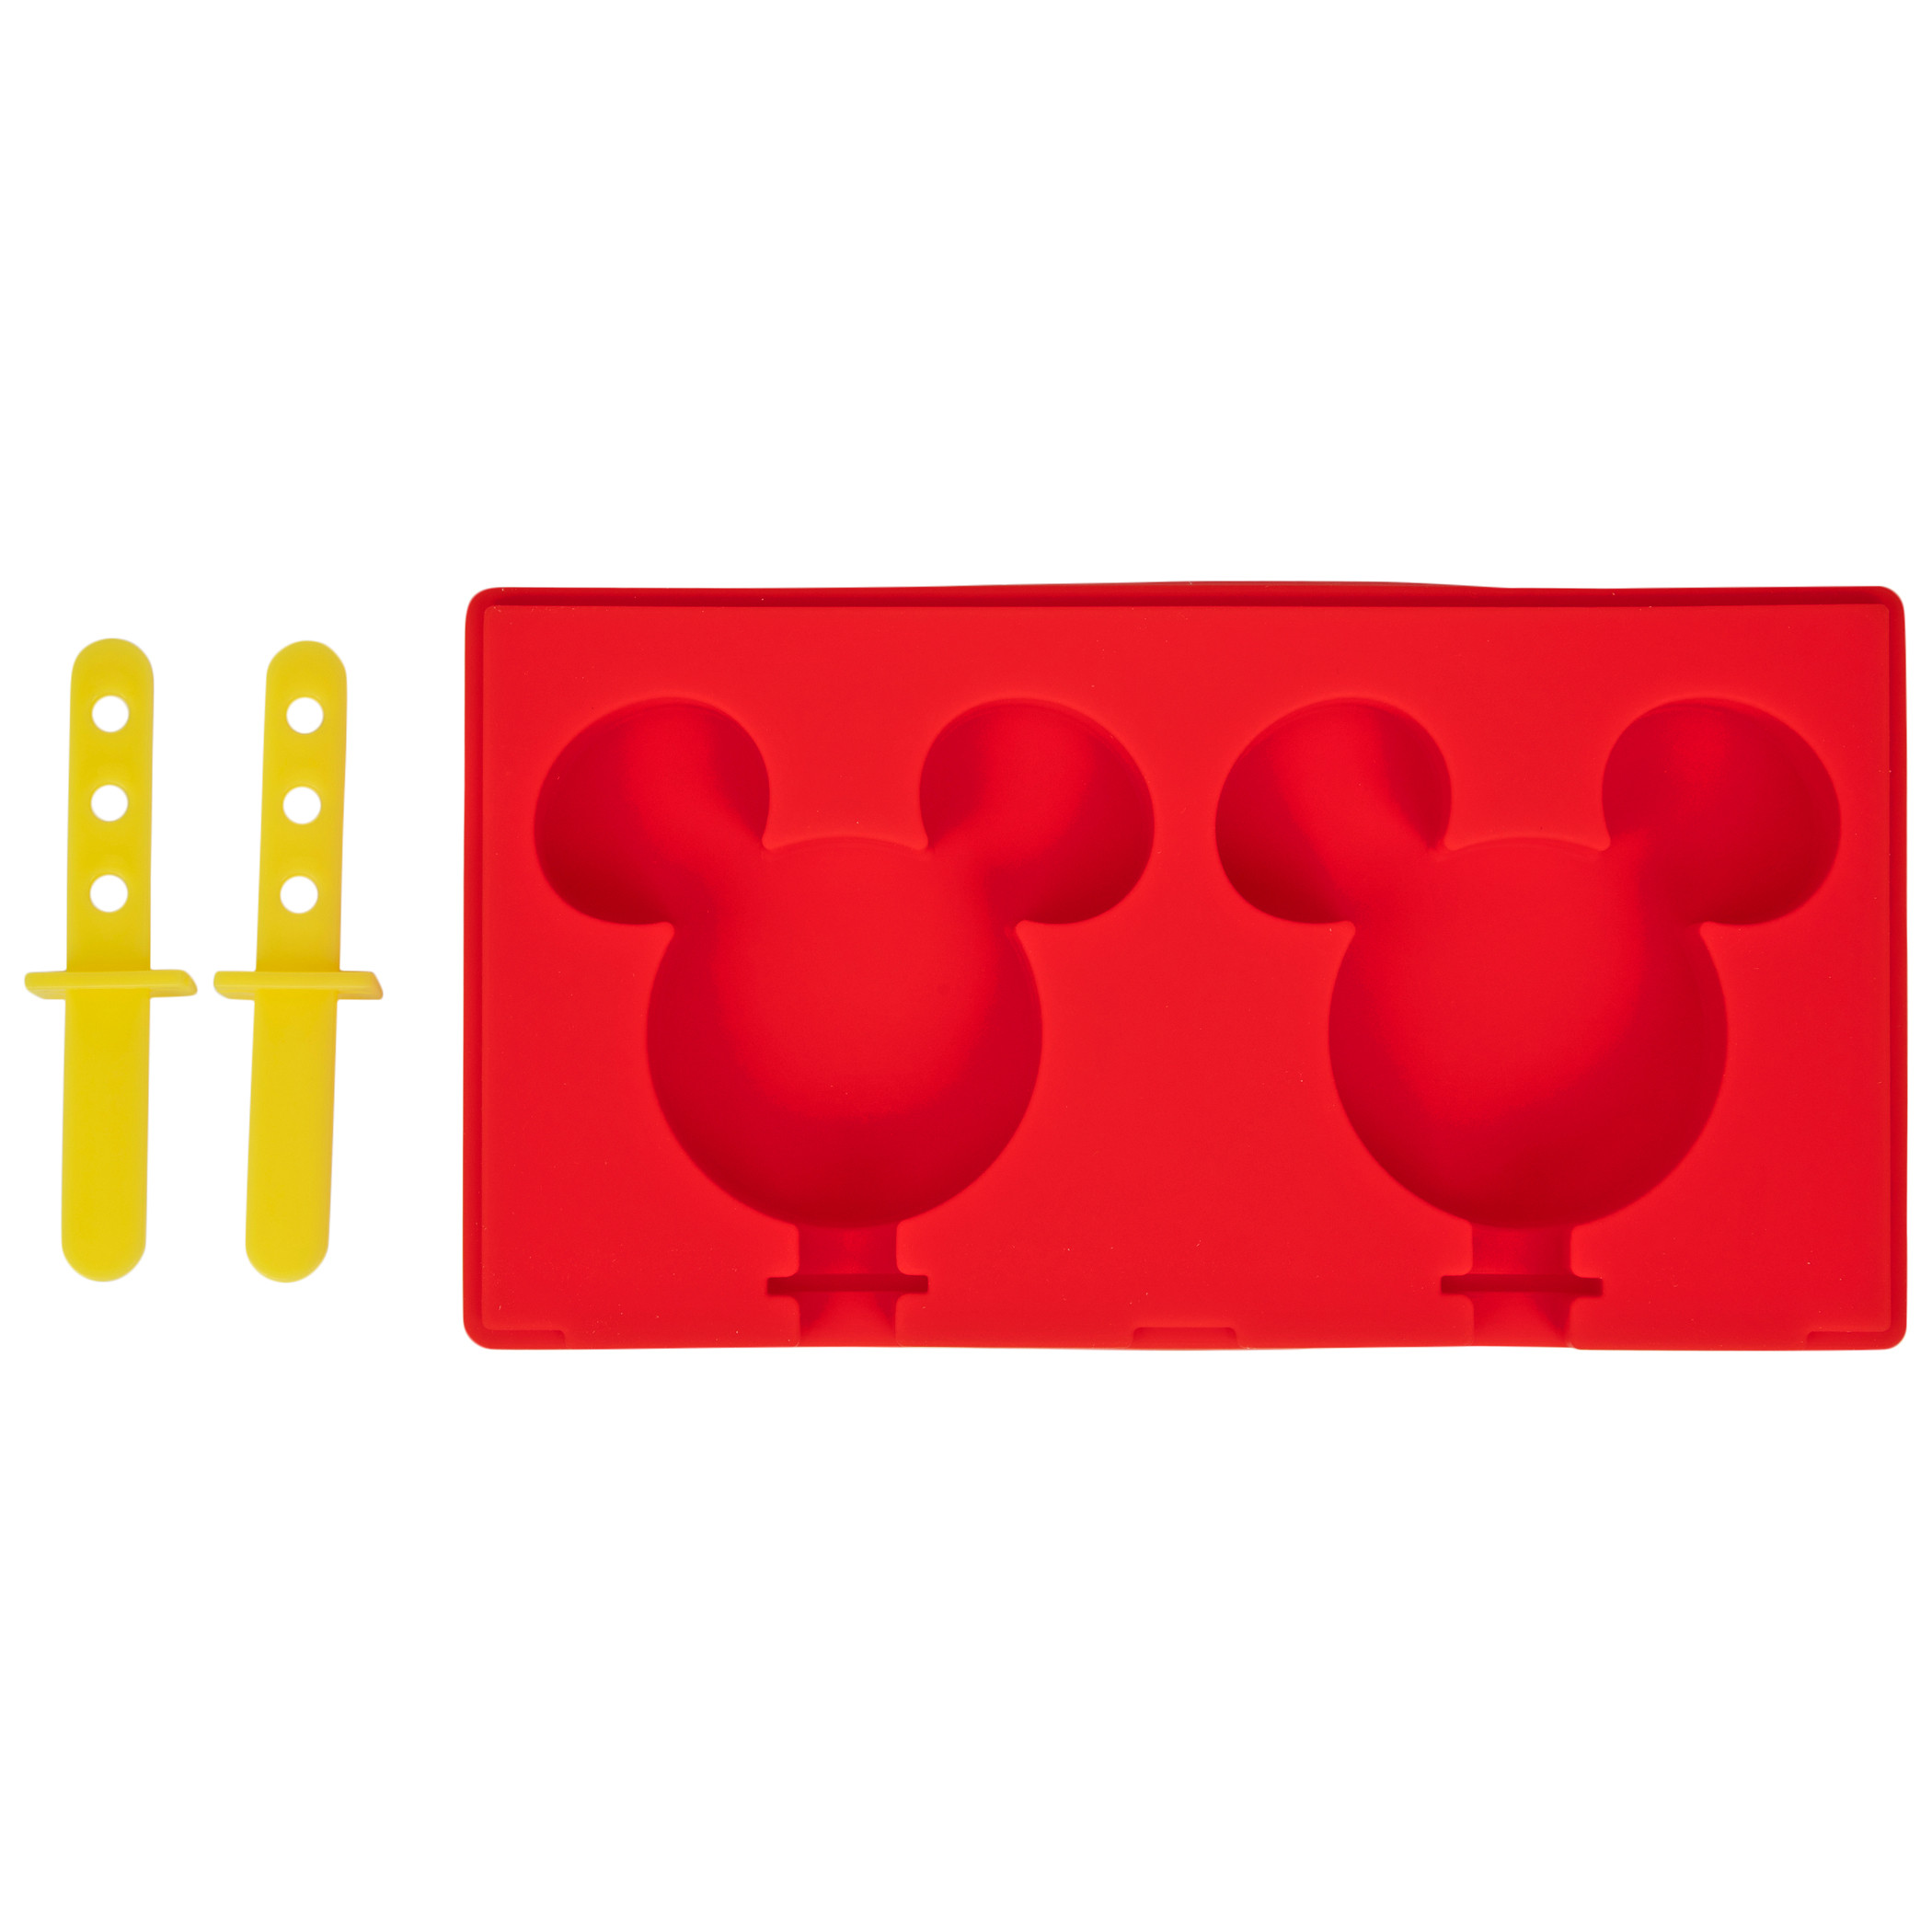 Disney Mickey Mouse Icon 2pc Popsicle Maker Set